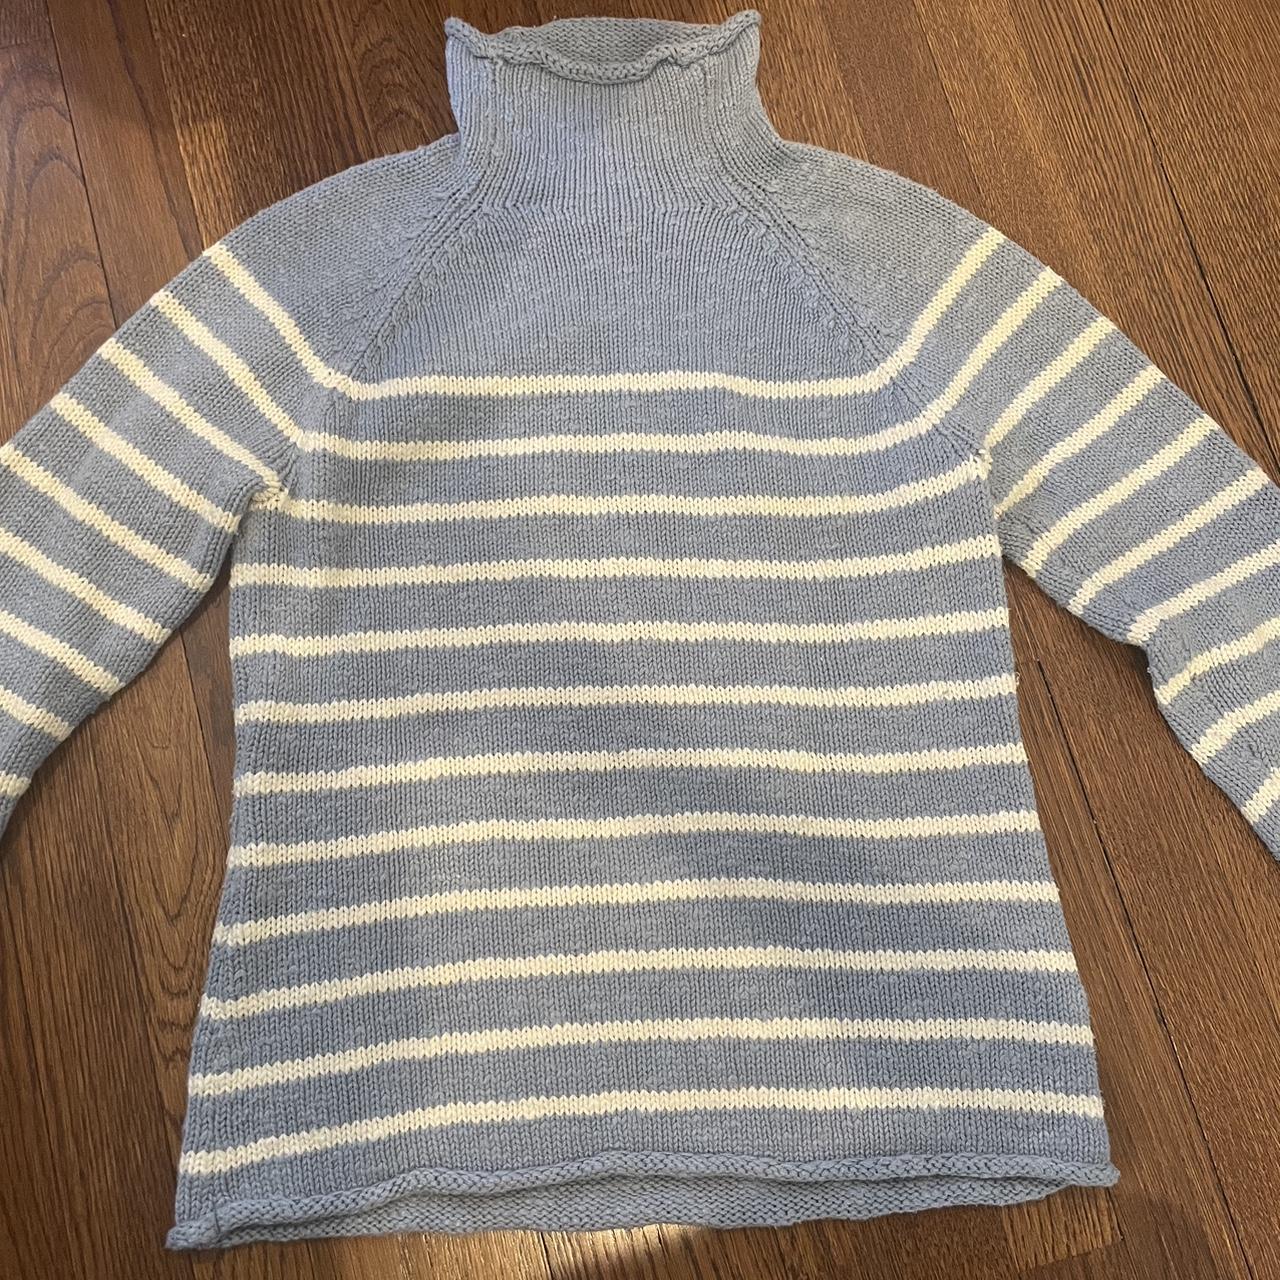 stripped LL bean sweater size small - Depop